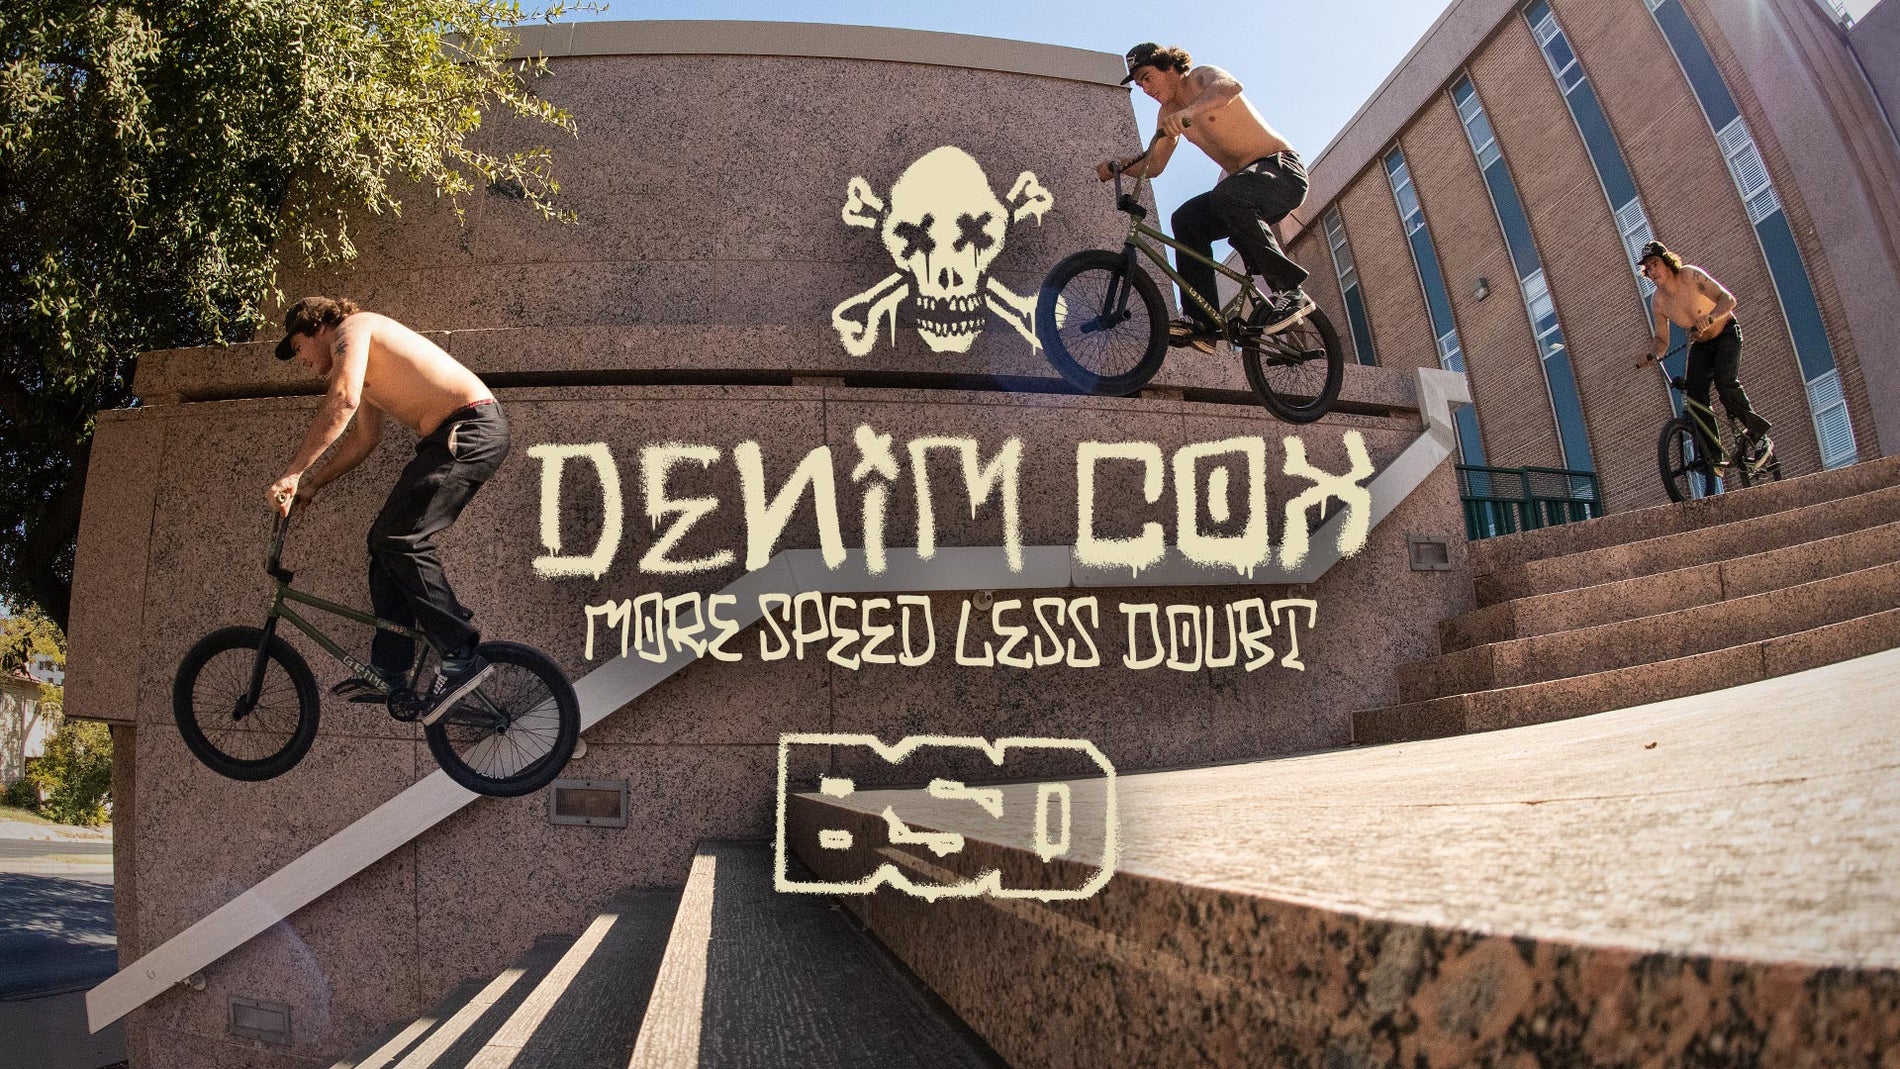 Denim Cox More Speed Less Doubt Video